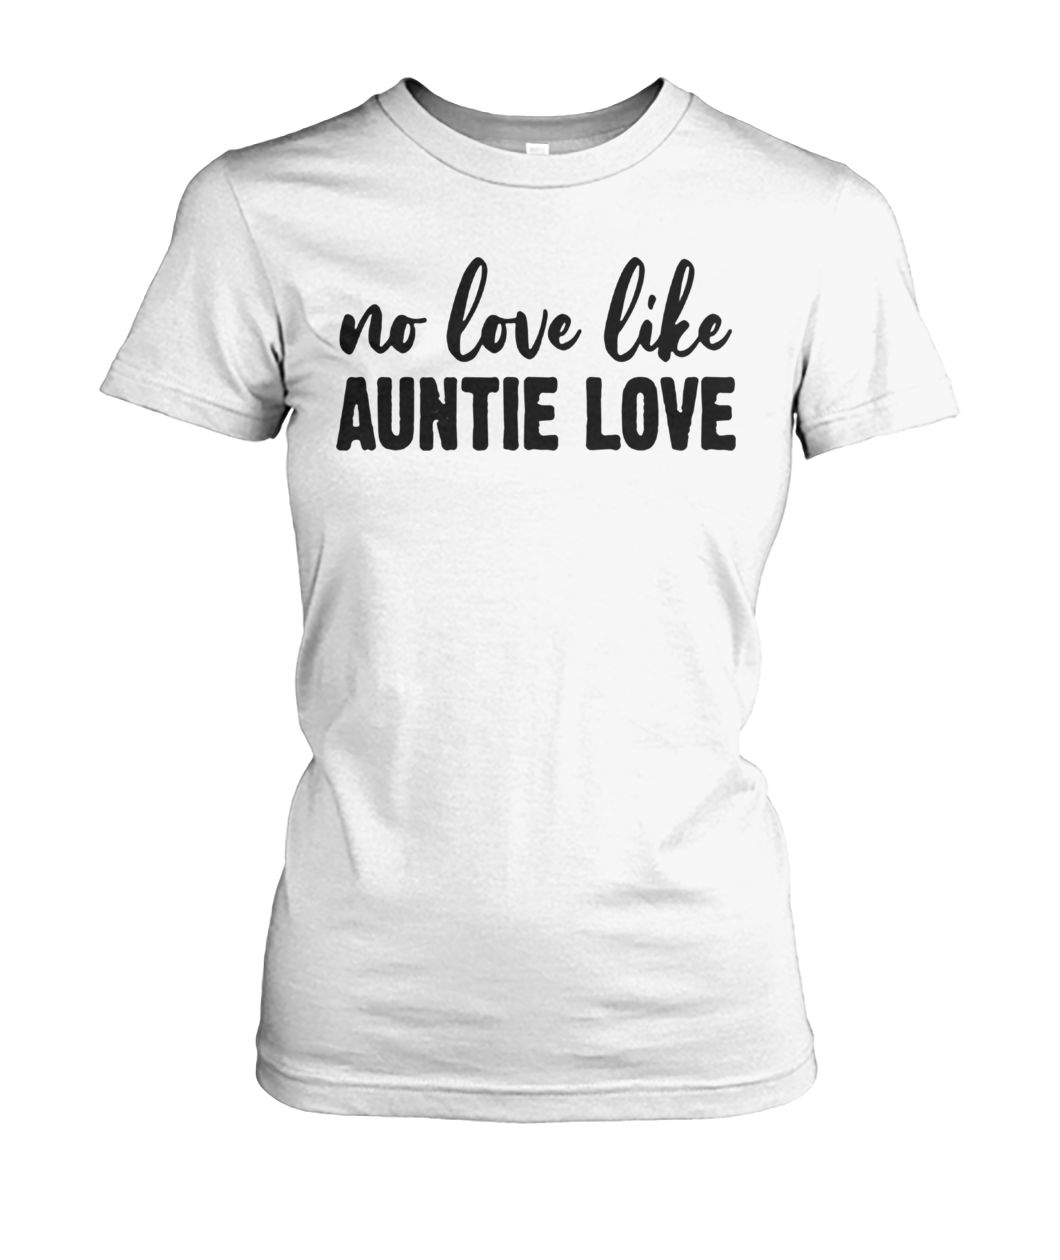 No love like auntie love women's crew tee